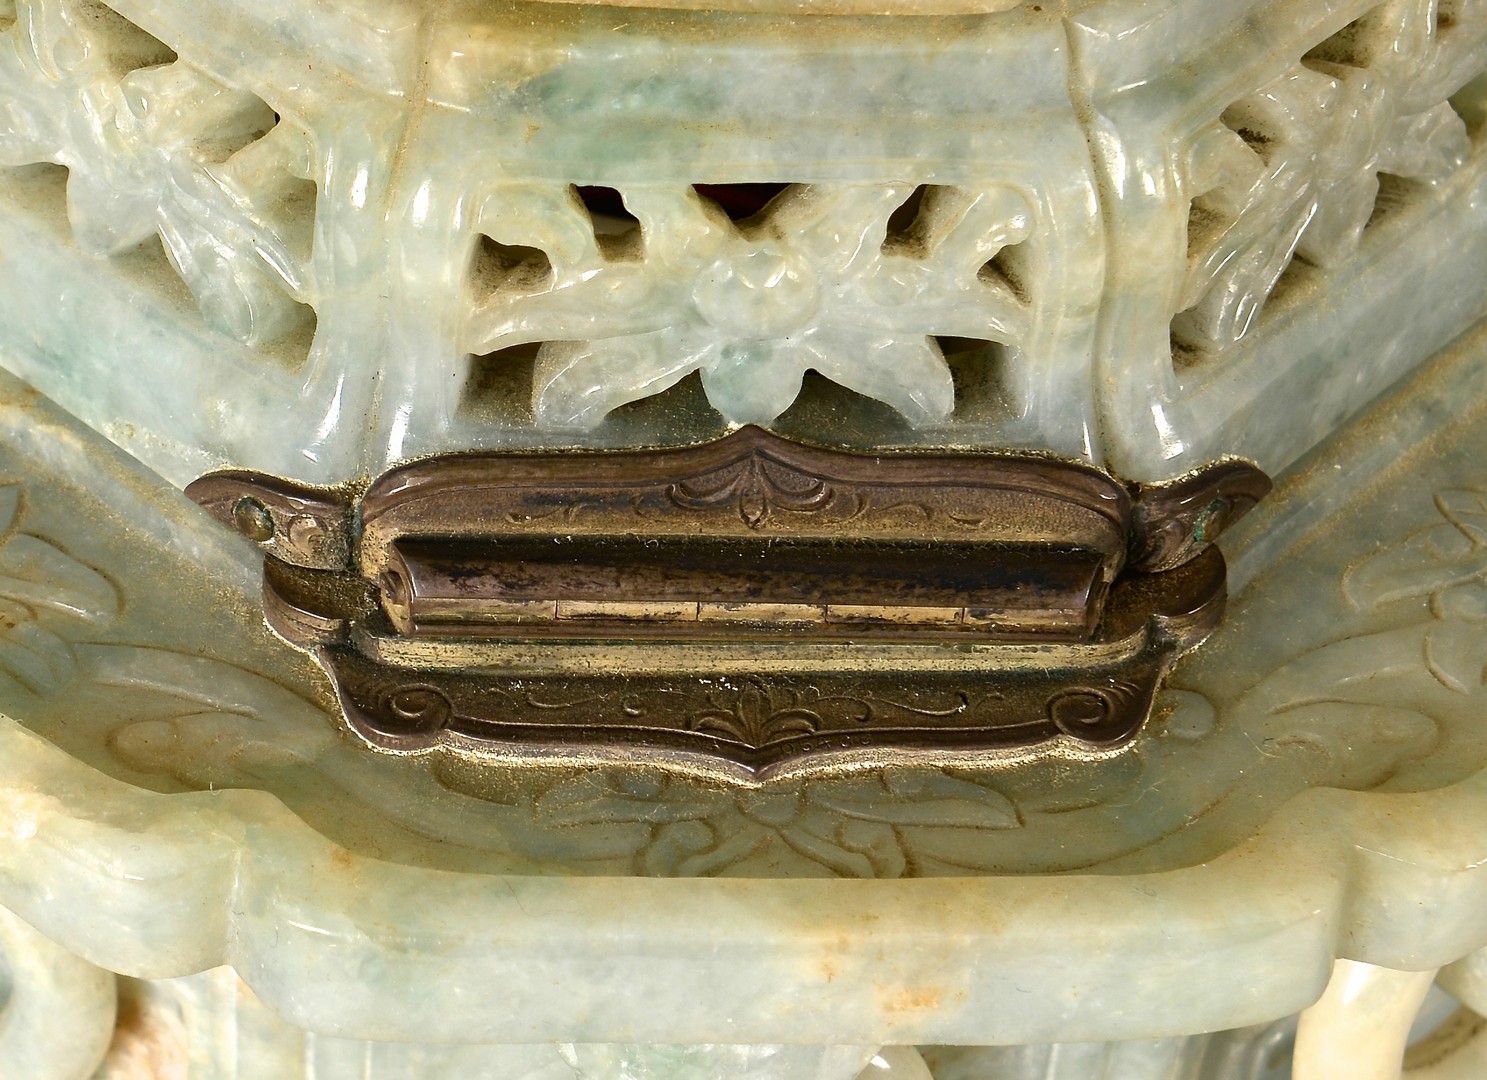 Lot 17: Chinese Carved Jade Censer Lamp